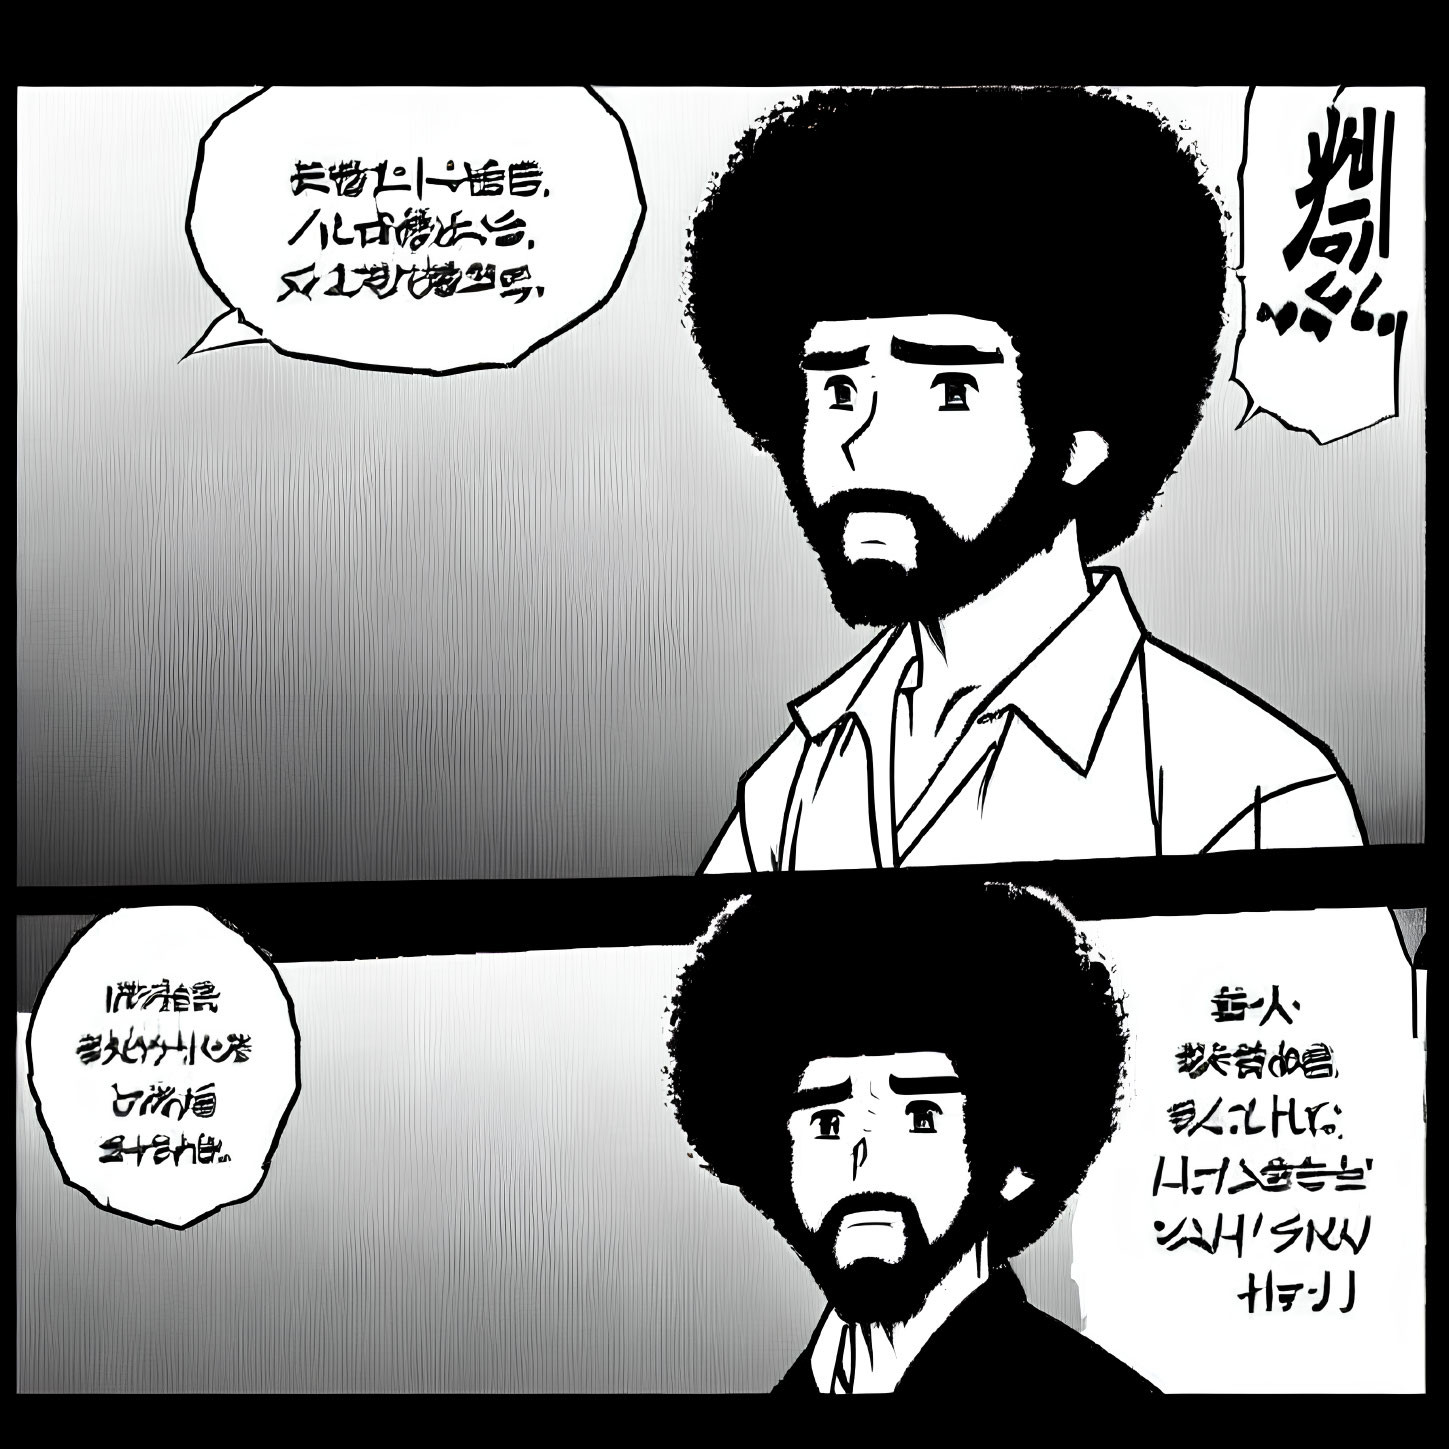 Monochrome Comic Panel: Afro Man with Japanese Speech Bubbles